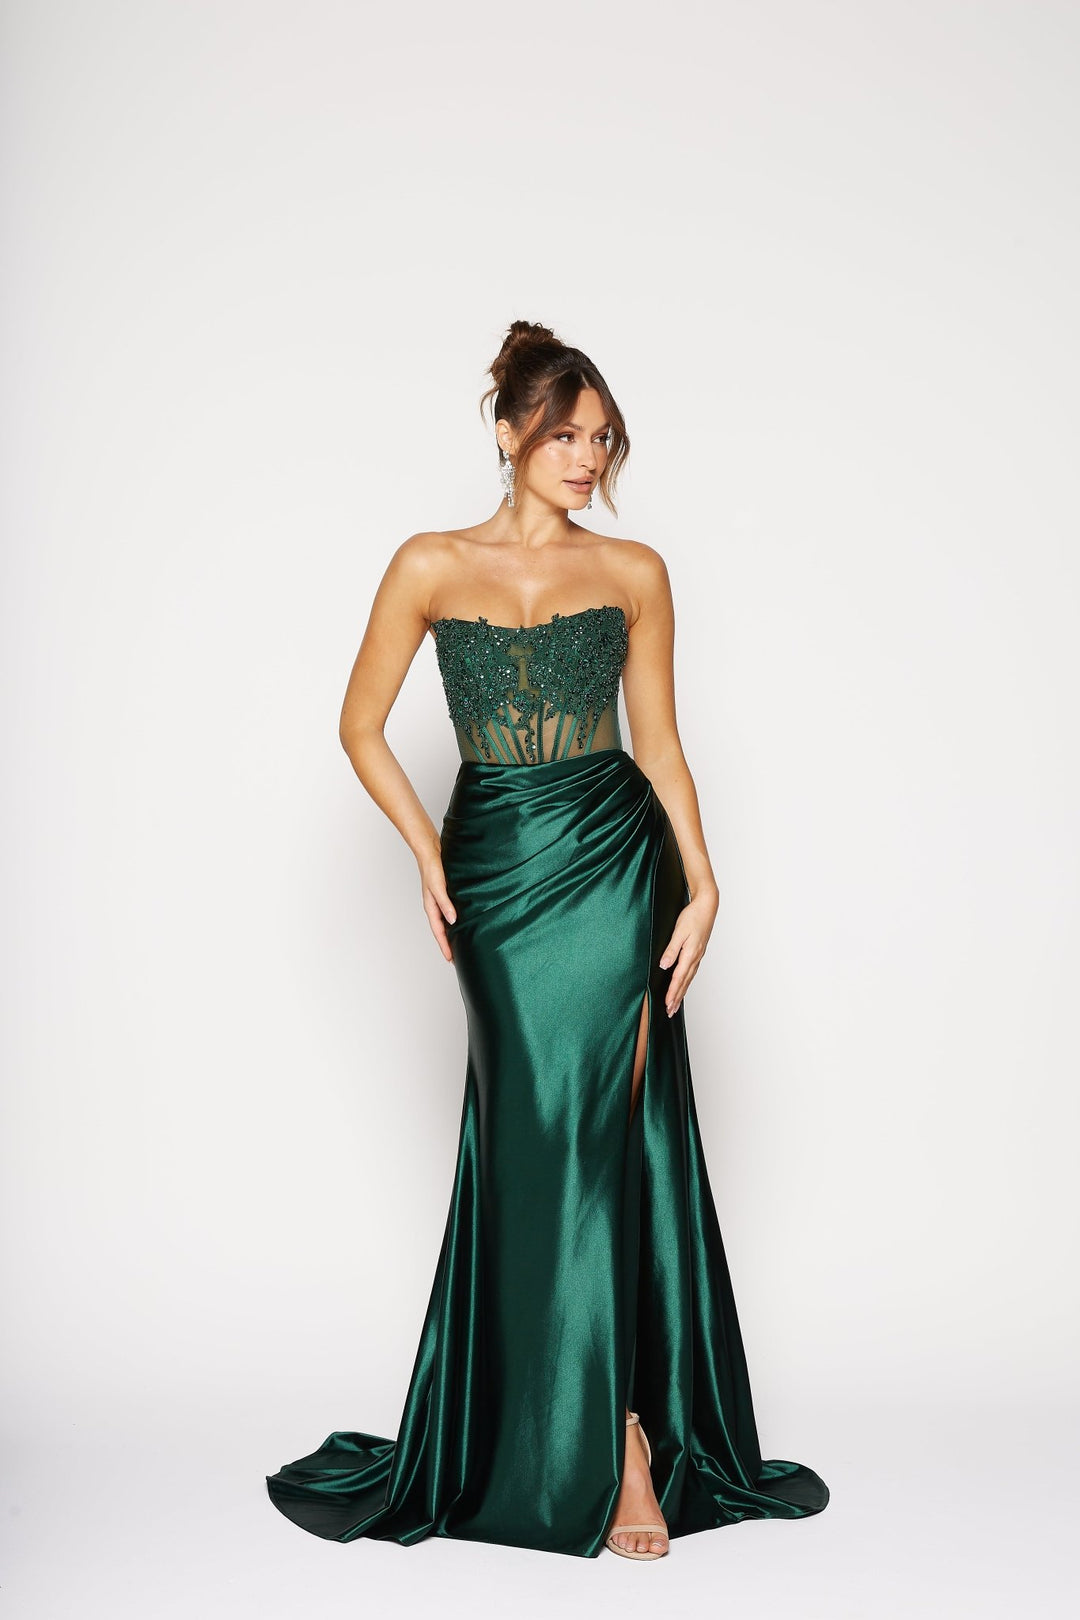 Ondine Dress by Tania Olsen PO2444 - ElissaJay Boutique